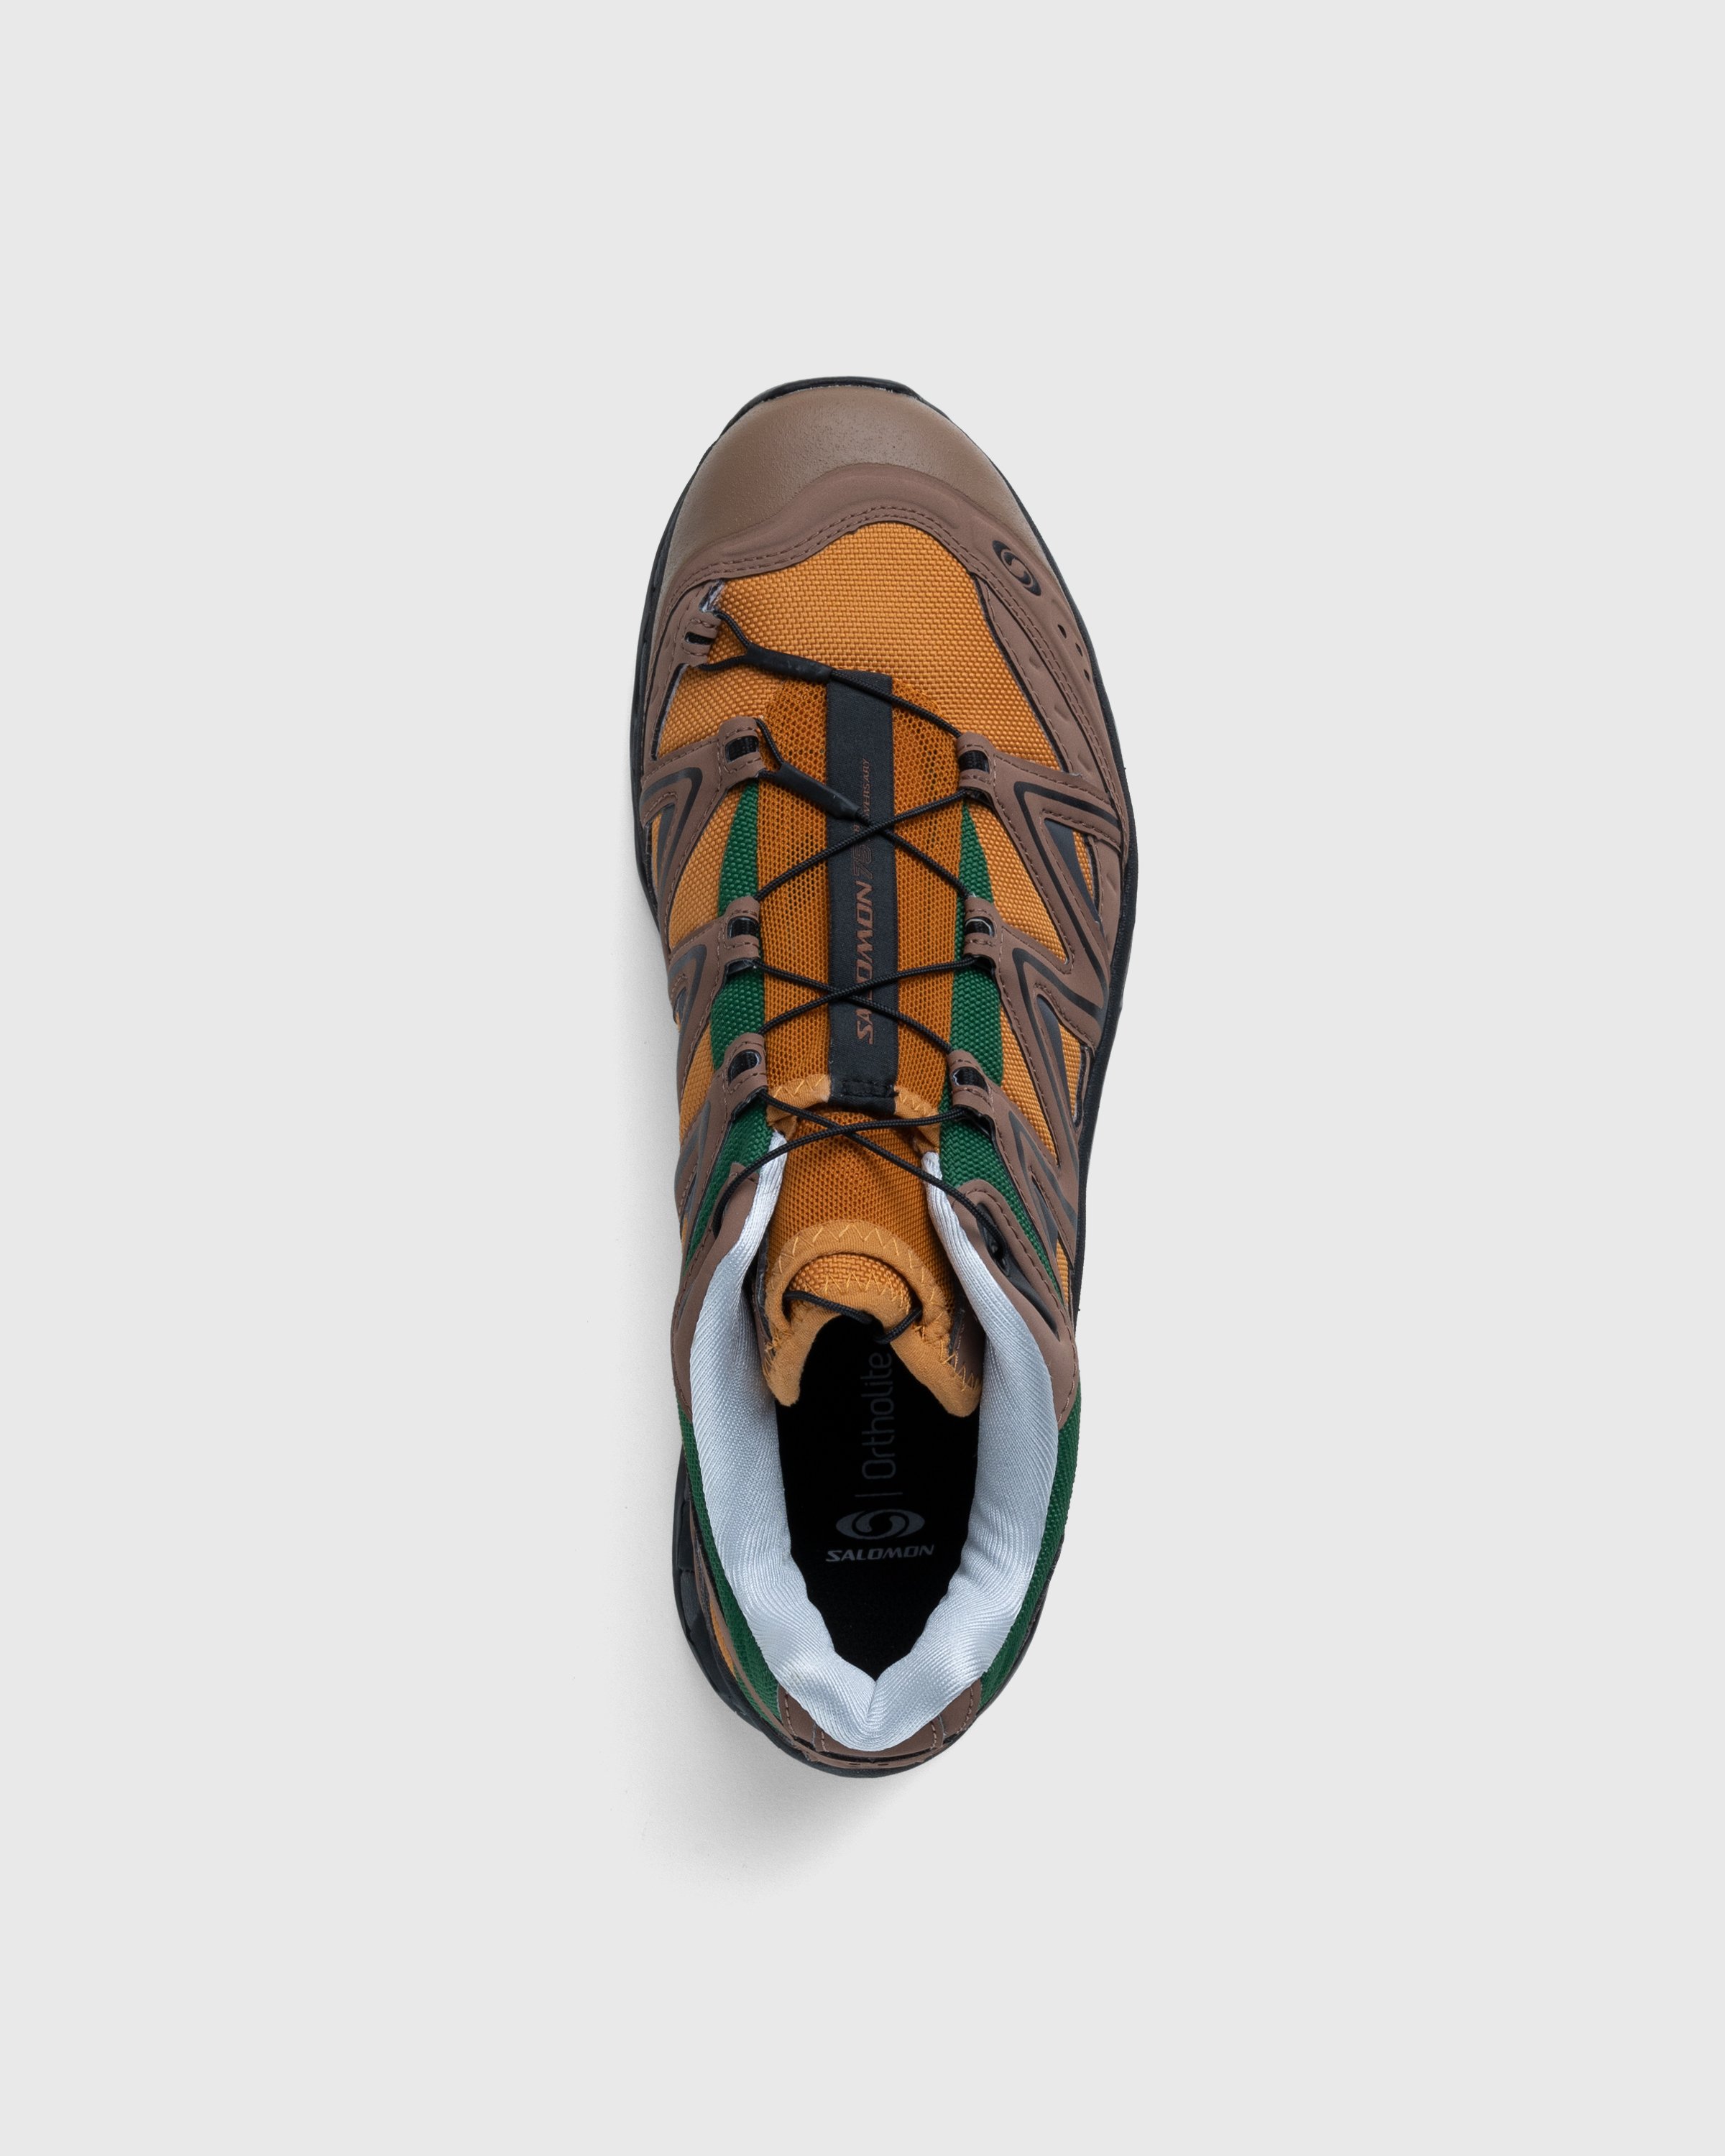 Salomon - XT-Quest 75th Golden Oak/Acorn/Black - Footwear - Brown - Image 4